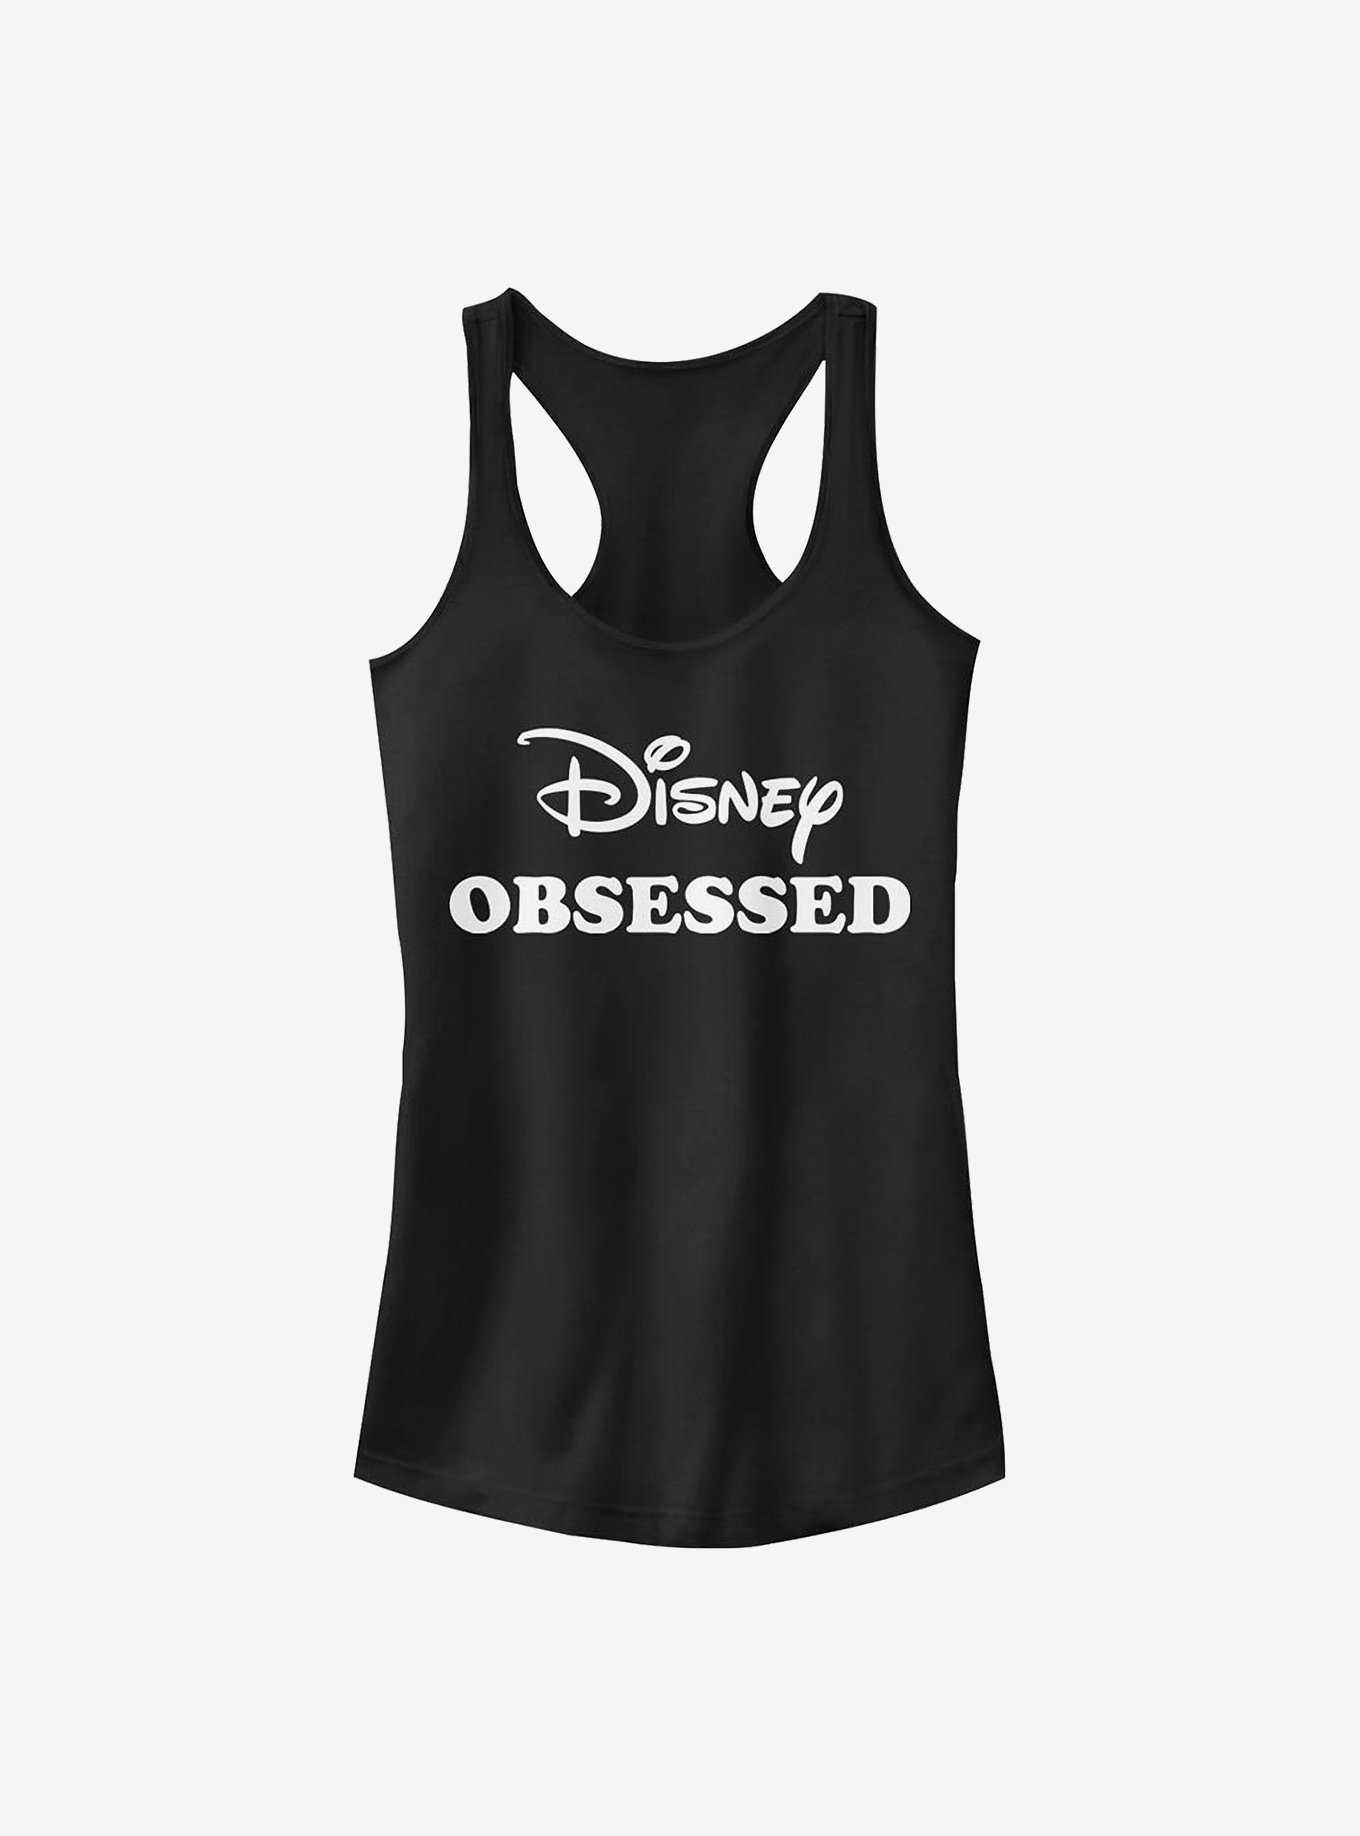 Disney Classic Logo Obsessed Girls Tank, , hi-res